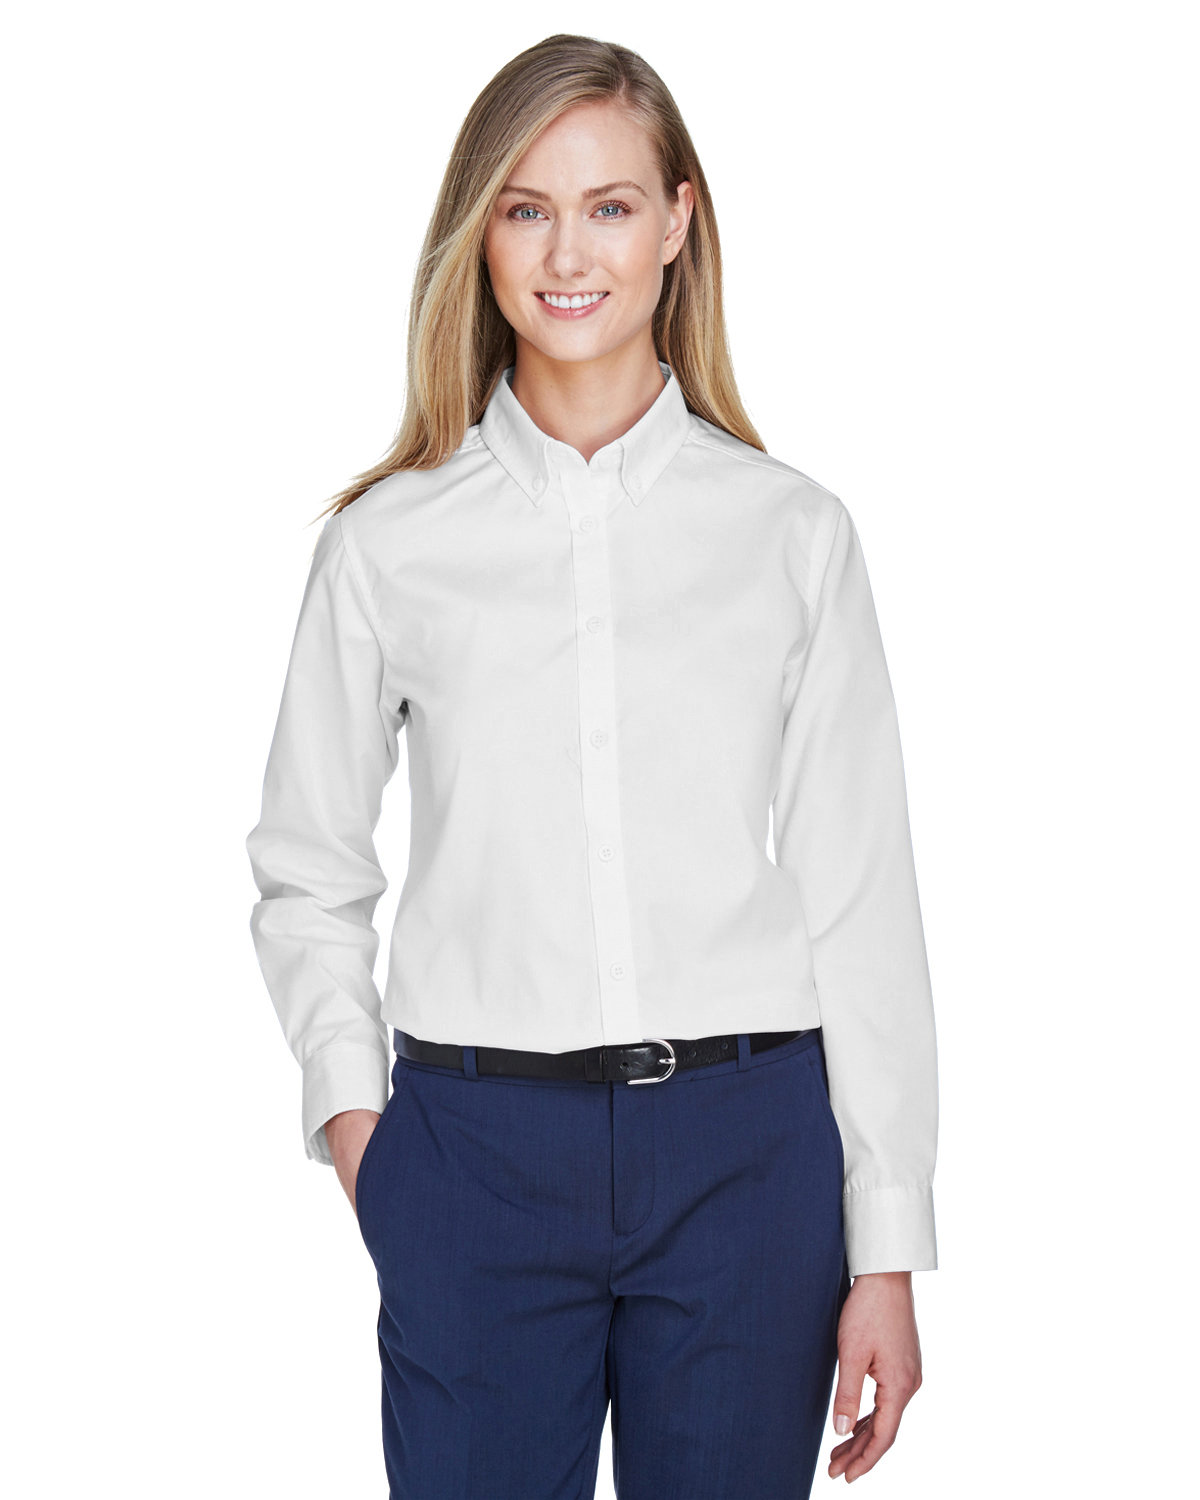 Core 365 78193 - Ladies' Operate Long-Sleeve Twill Shirt